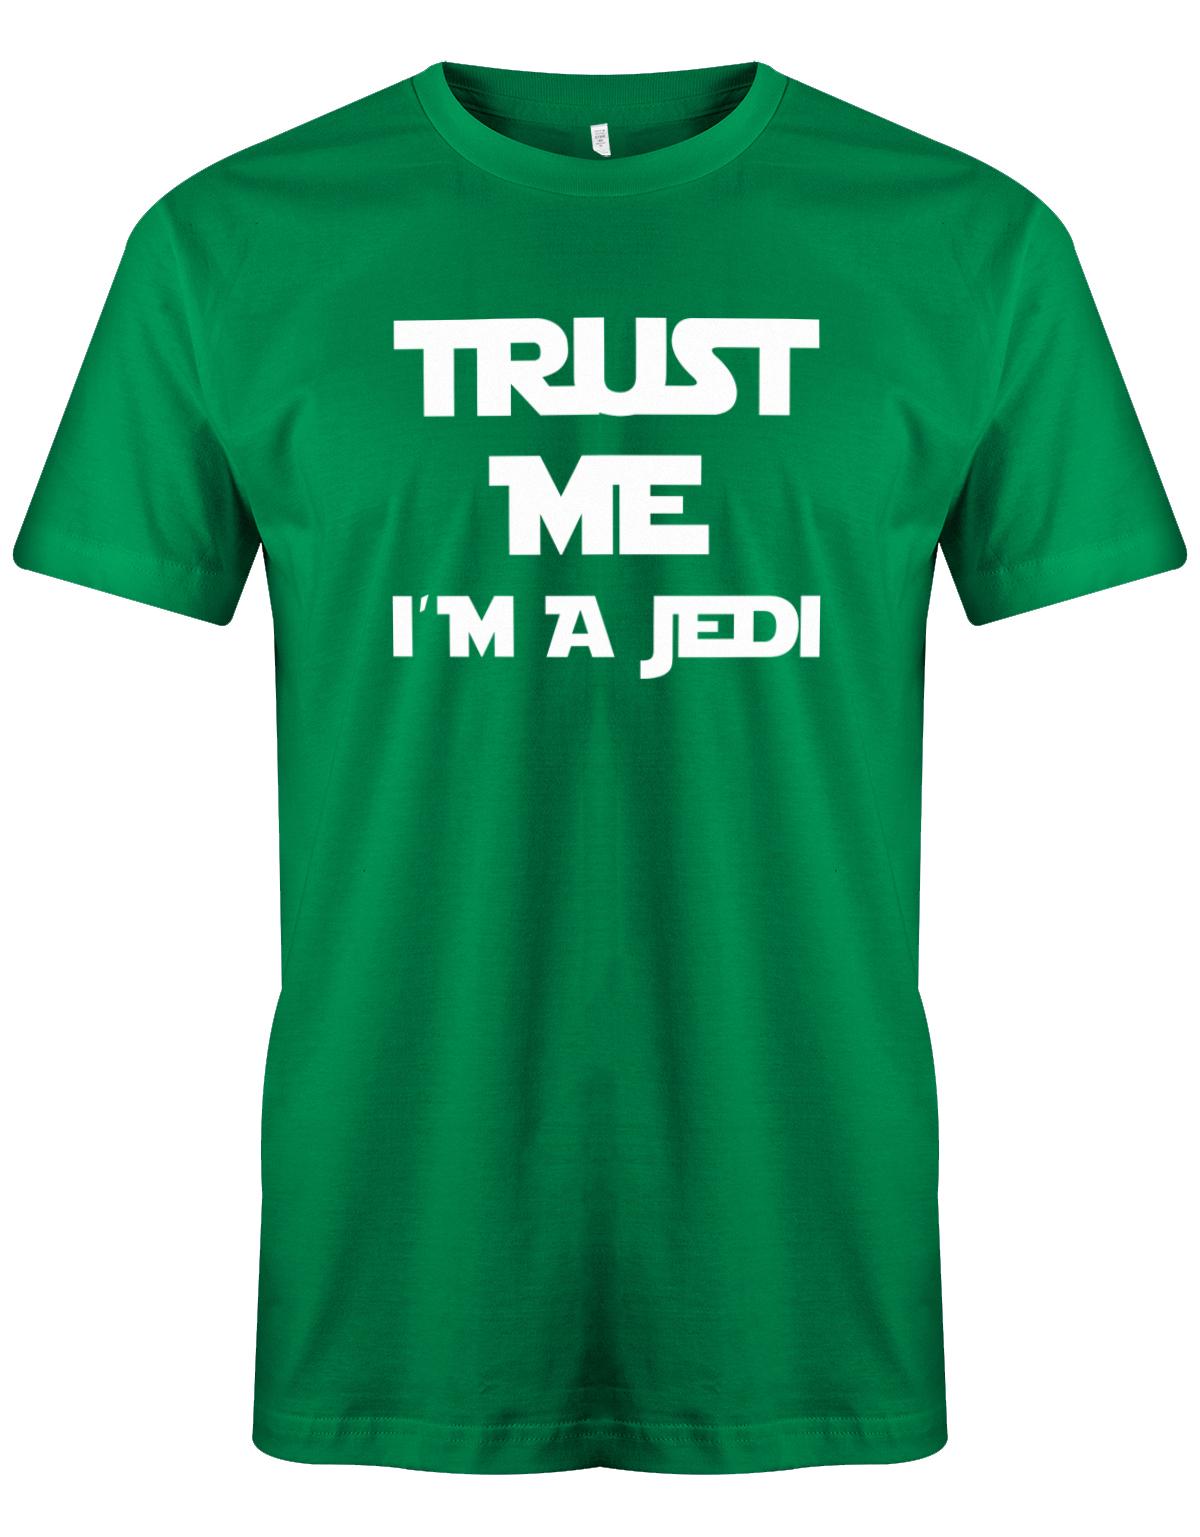 Trust-me-i-m-a-jedi-Herren-Shirt-Gr-n